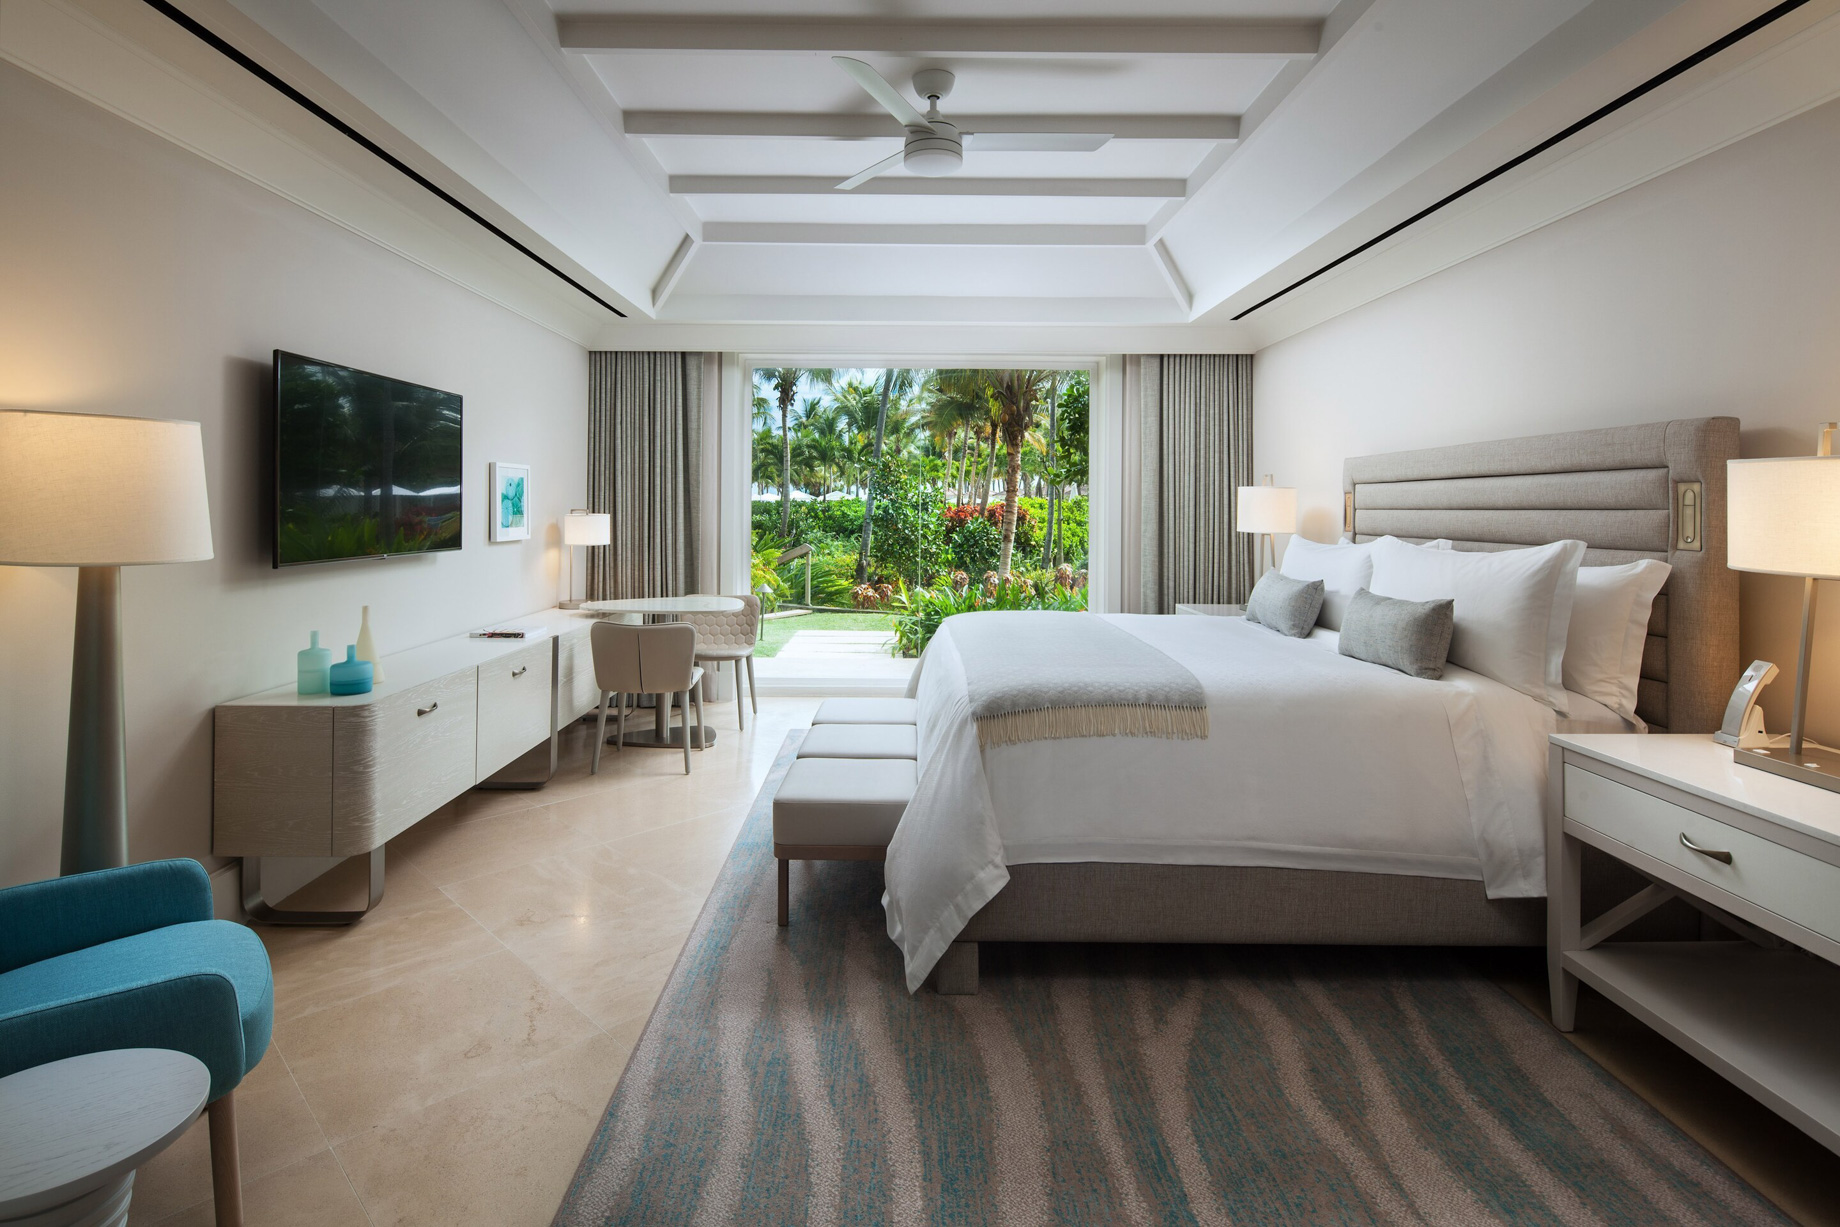 The St. Regis Bahia Beach Resort - Rio Grande, Puerto Rico - King Garden View Suite